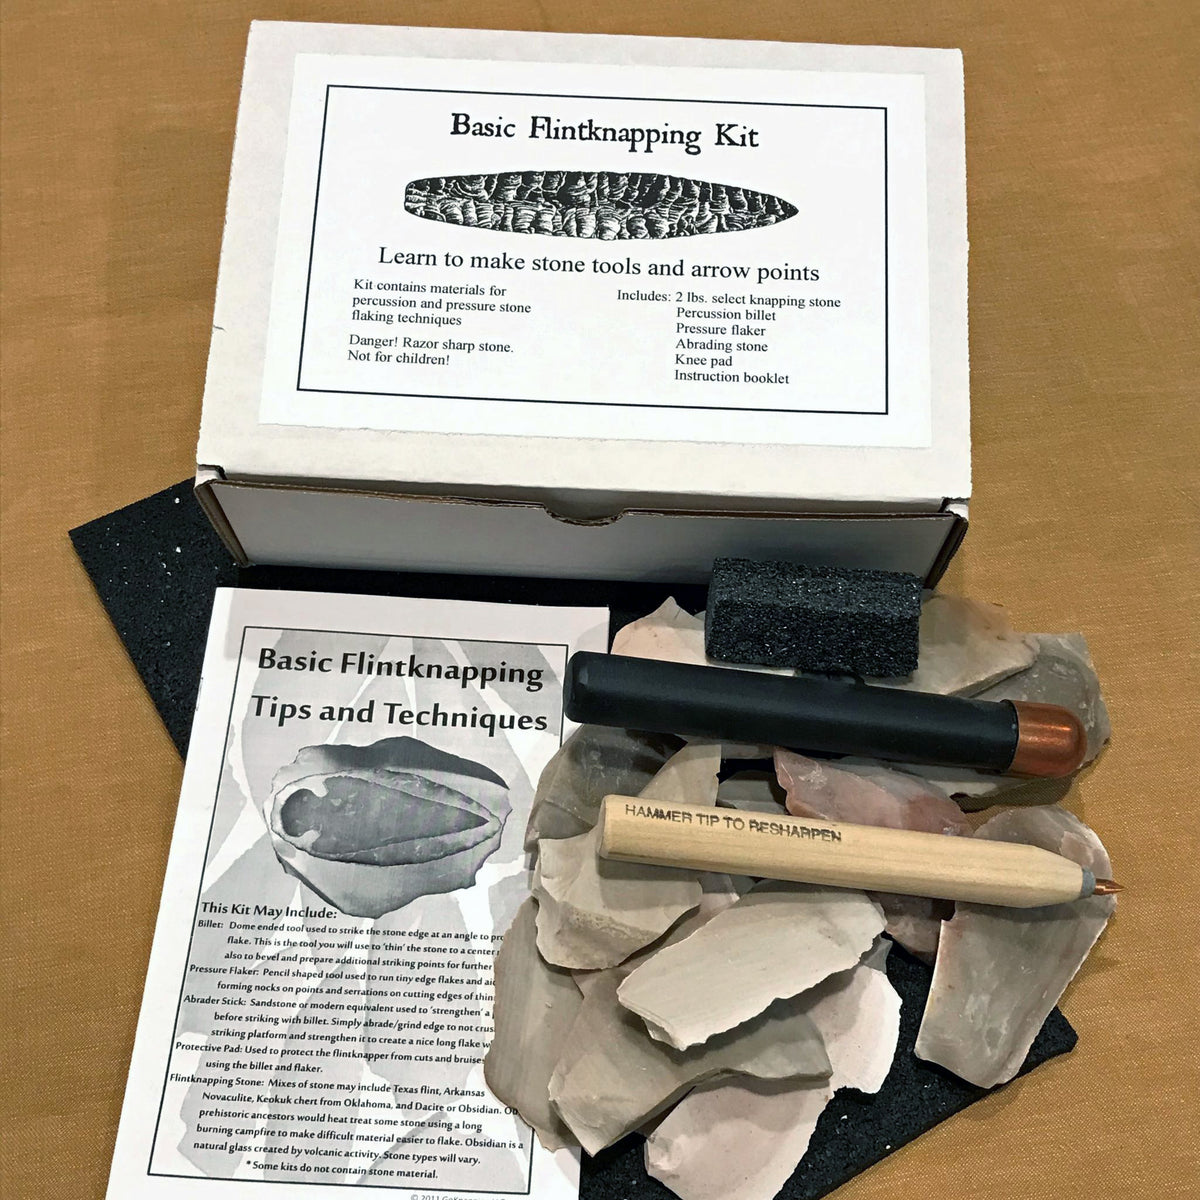 The Works' Flintknapping Kit